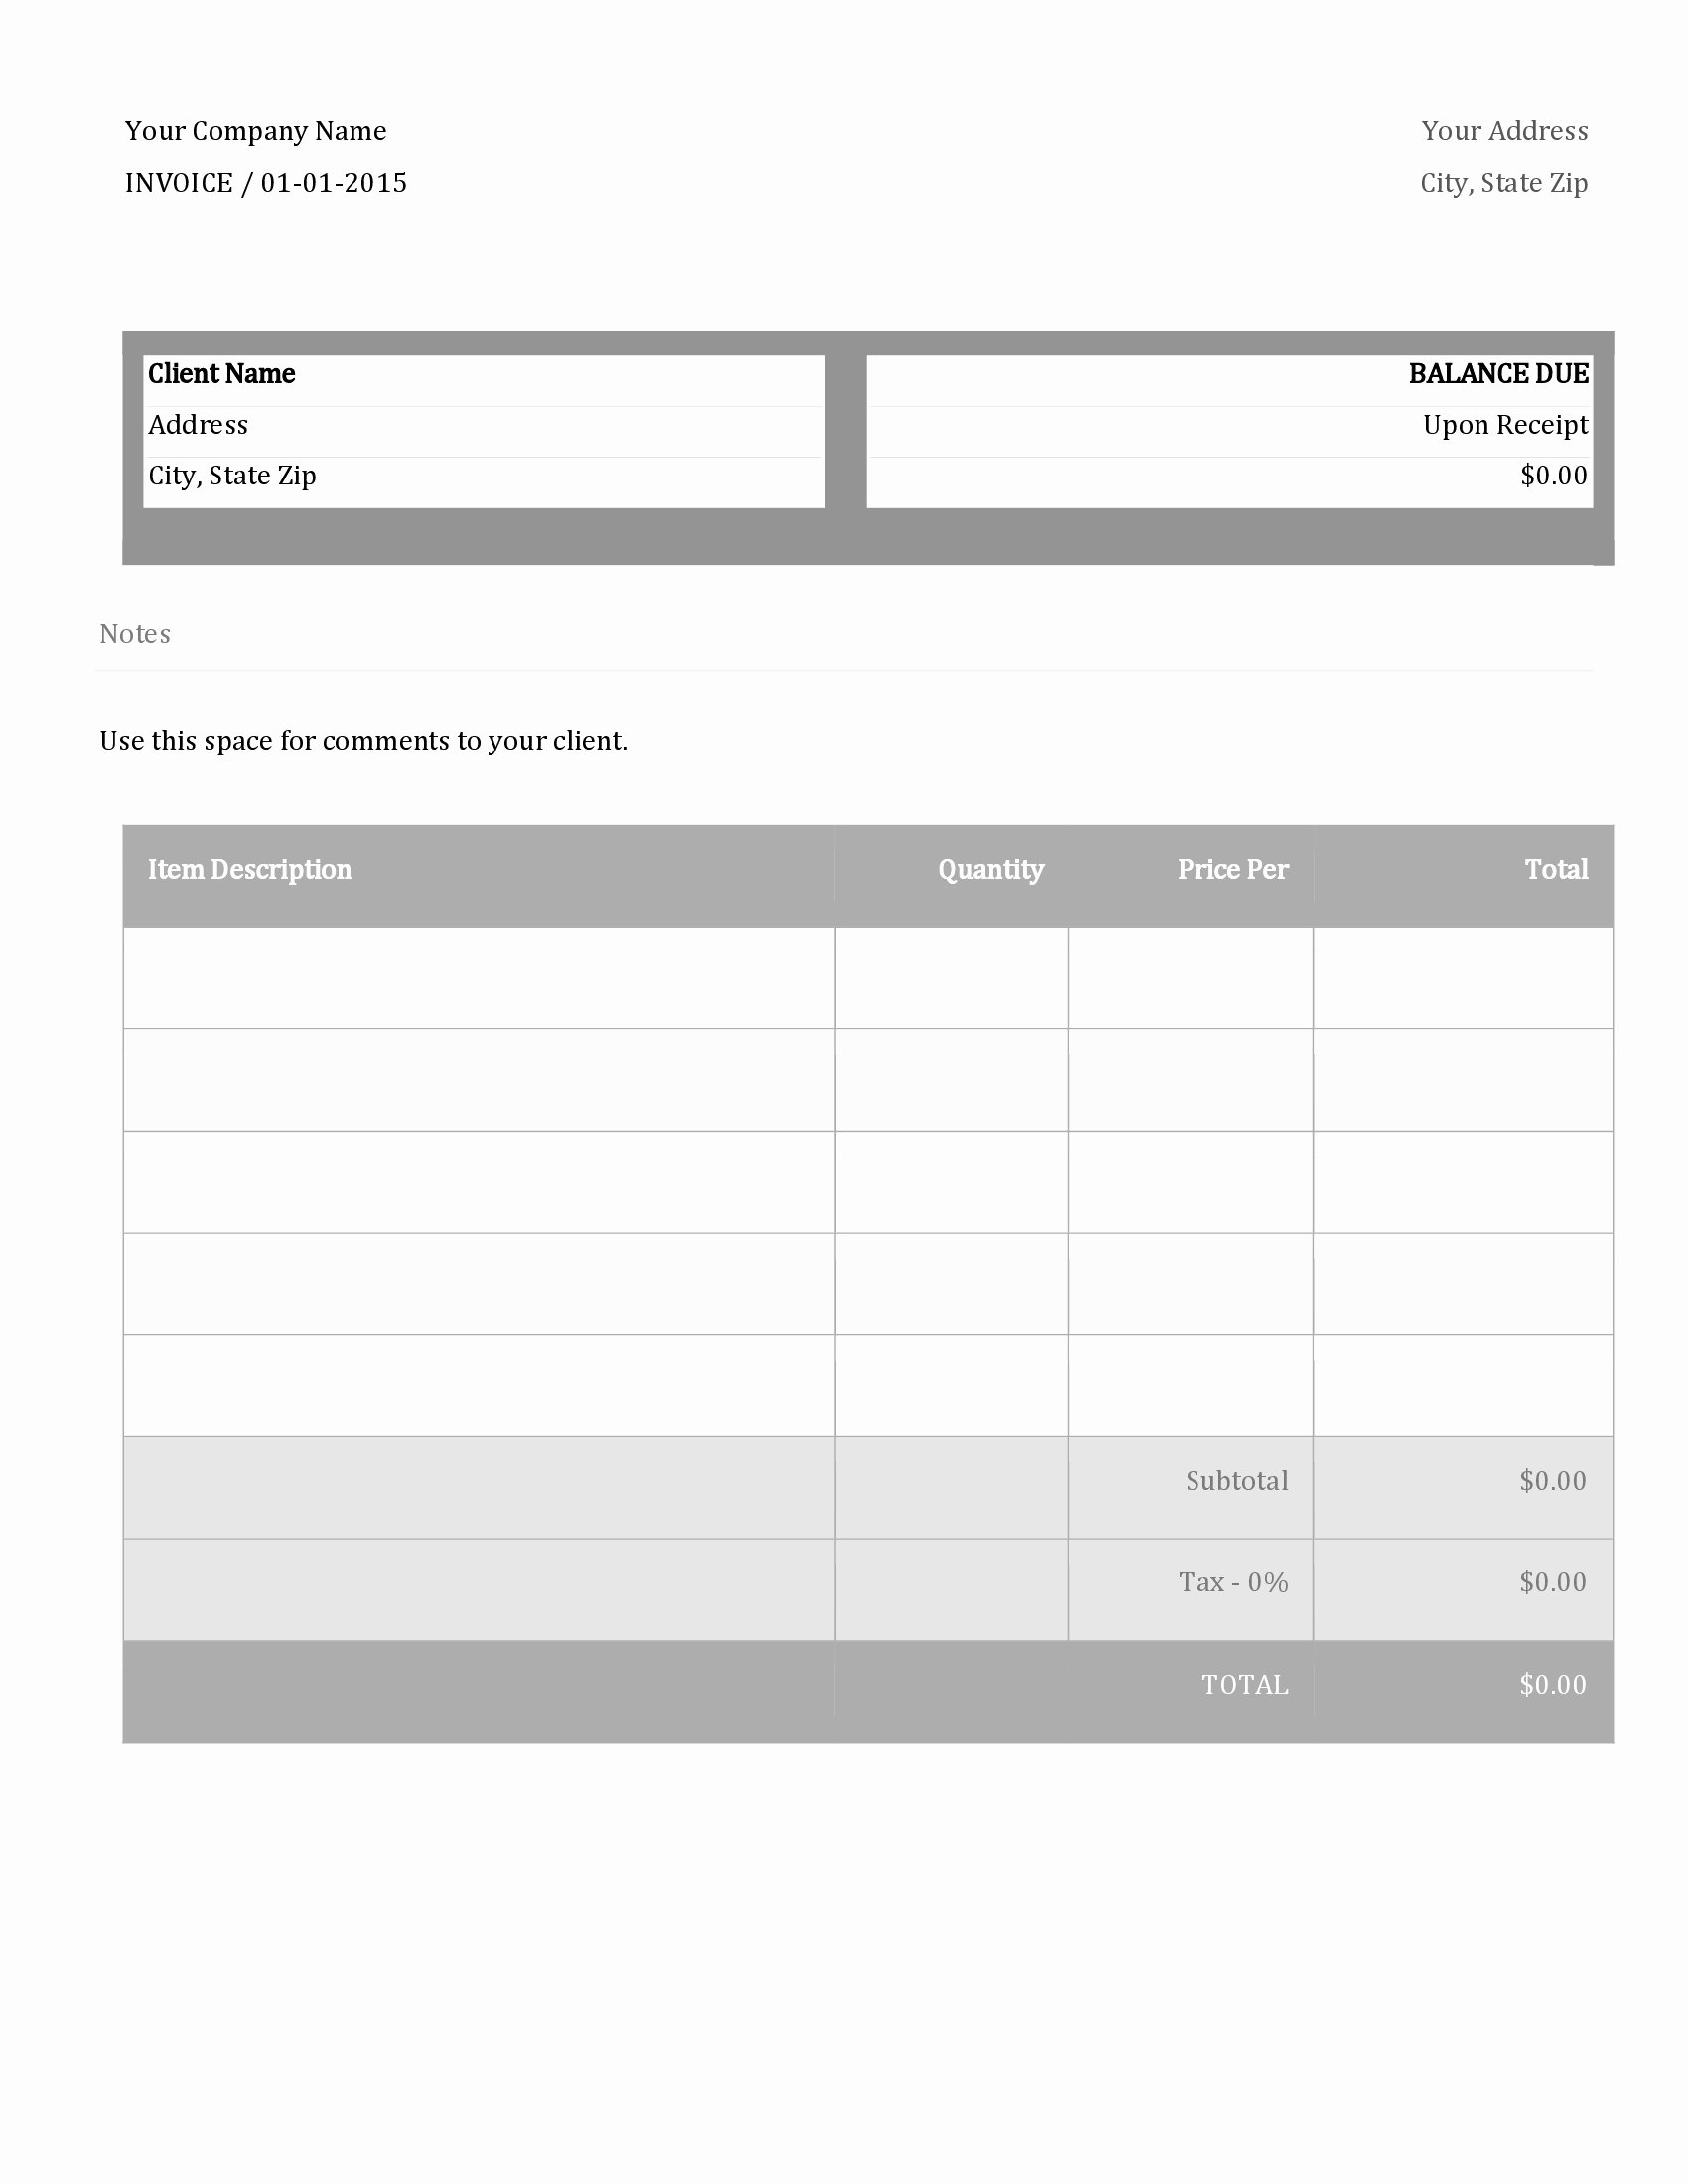 Invoice Spreadsheet Template Free Luxury Blank Invoice form Free